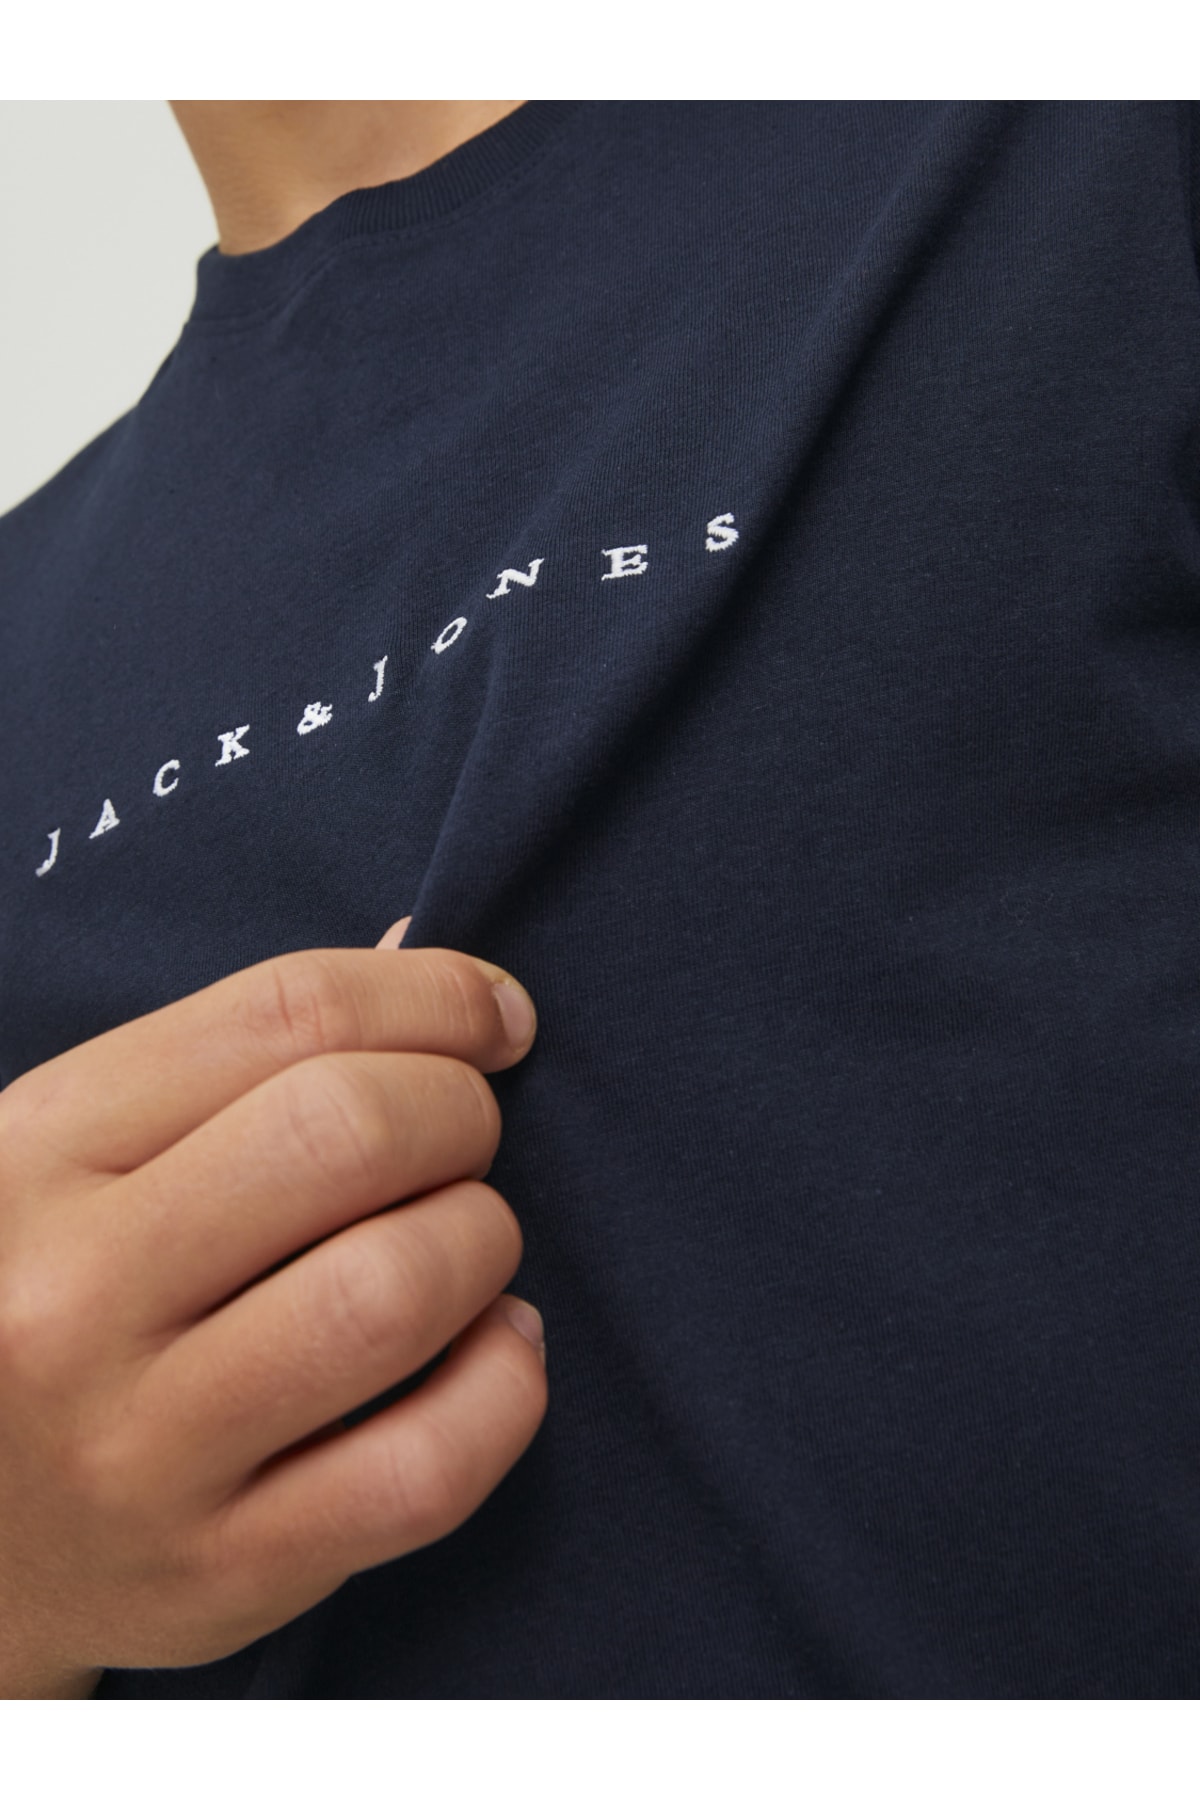 Jack & Jones تی شرت یقه خدمه لوگو - بچه گانه